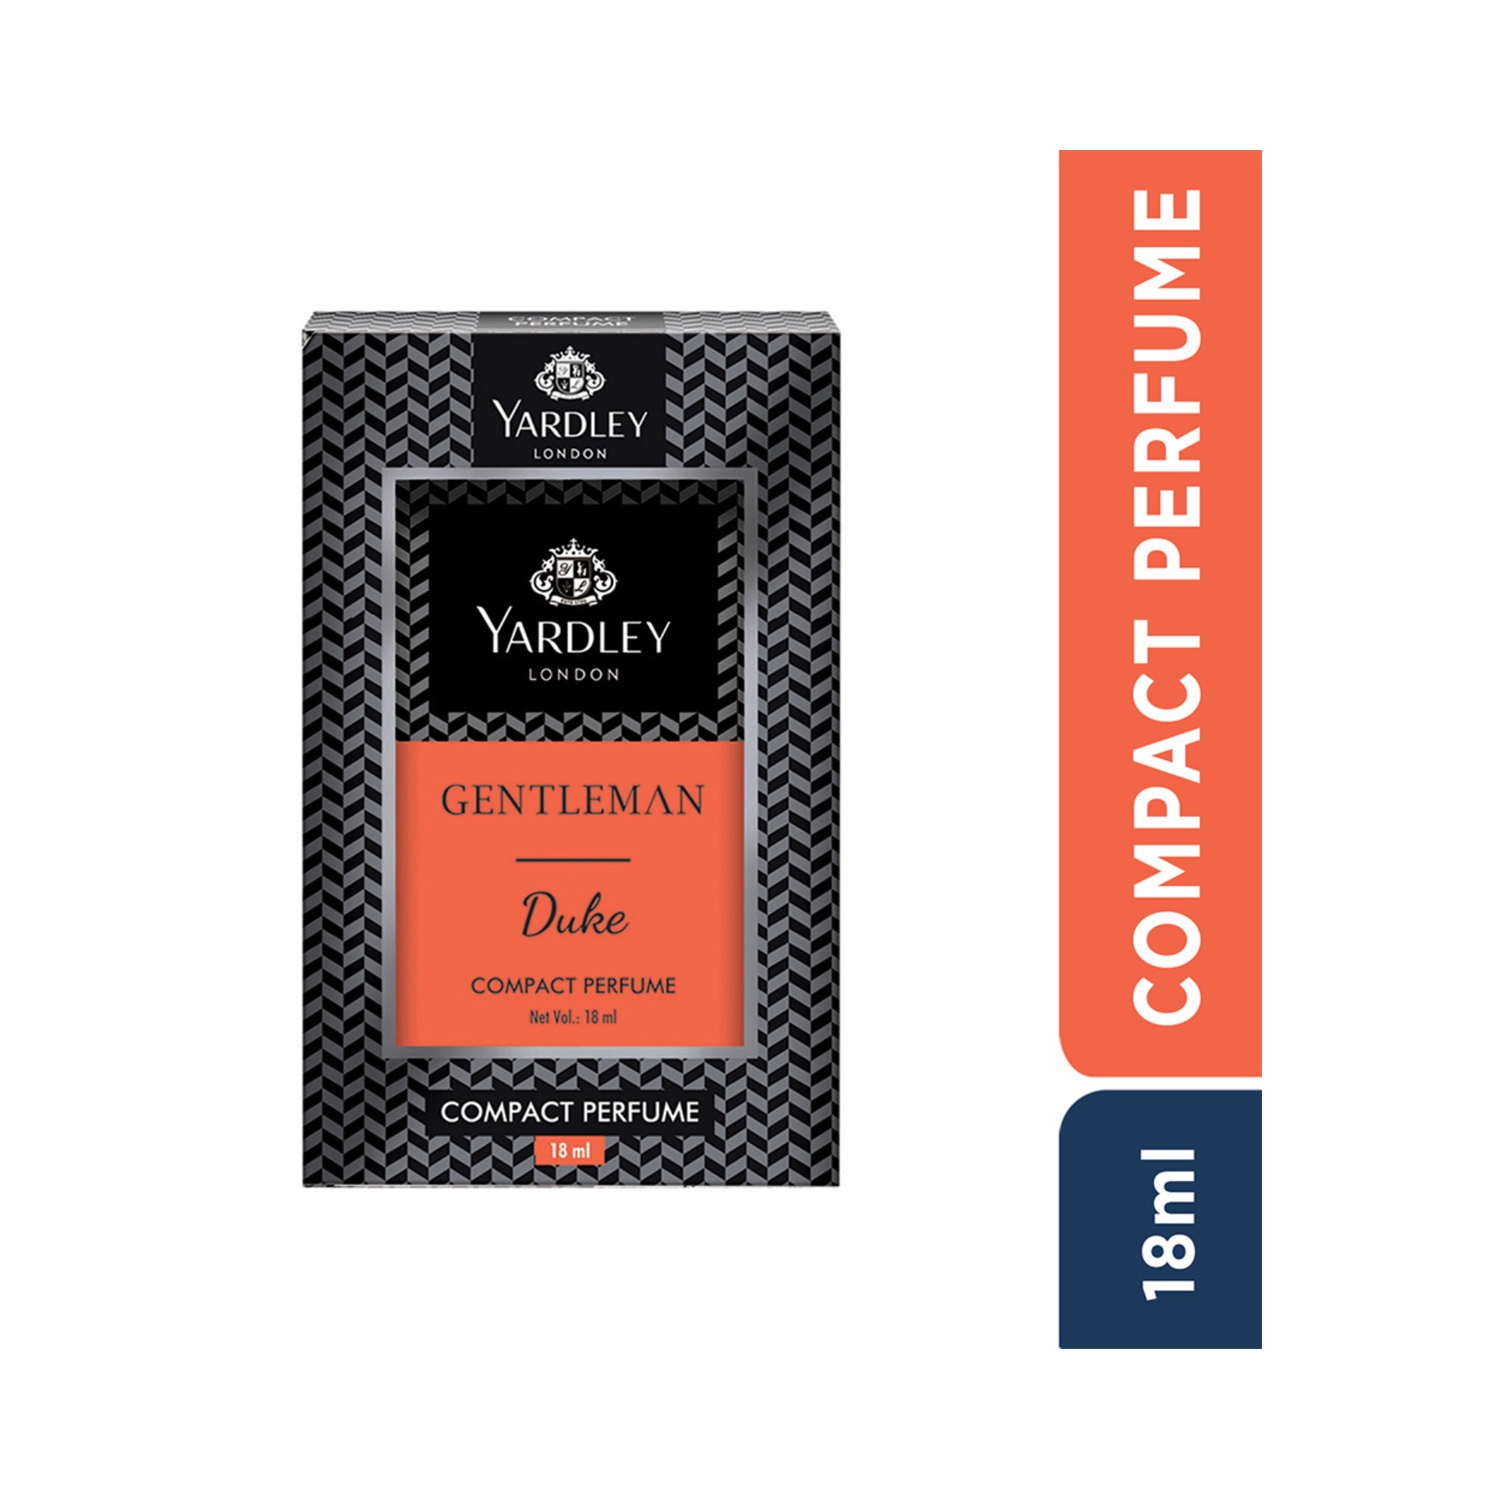 Yardley London | Yardley London Gentleman Duke Compact Perfume (18ml)